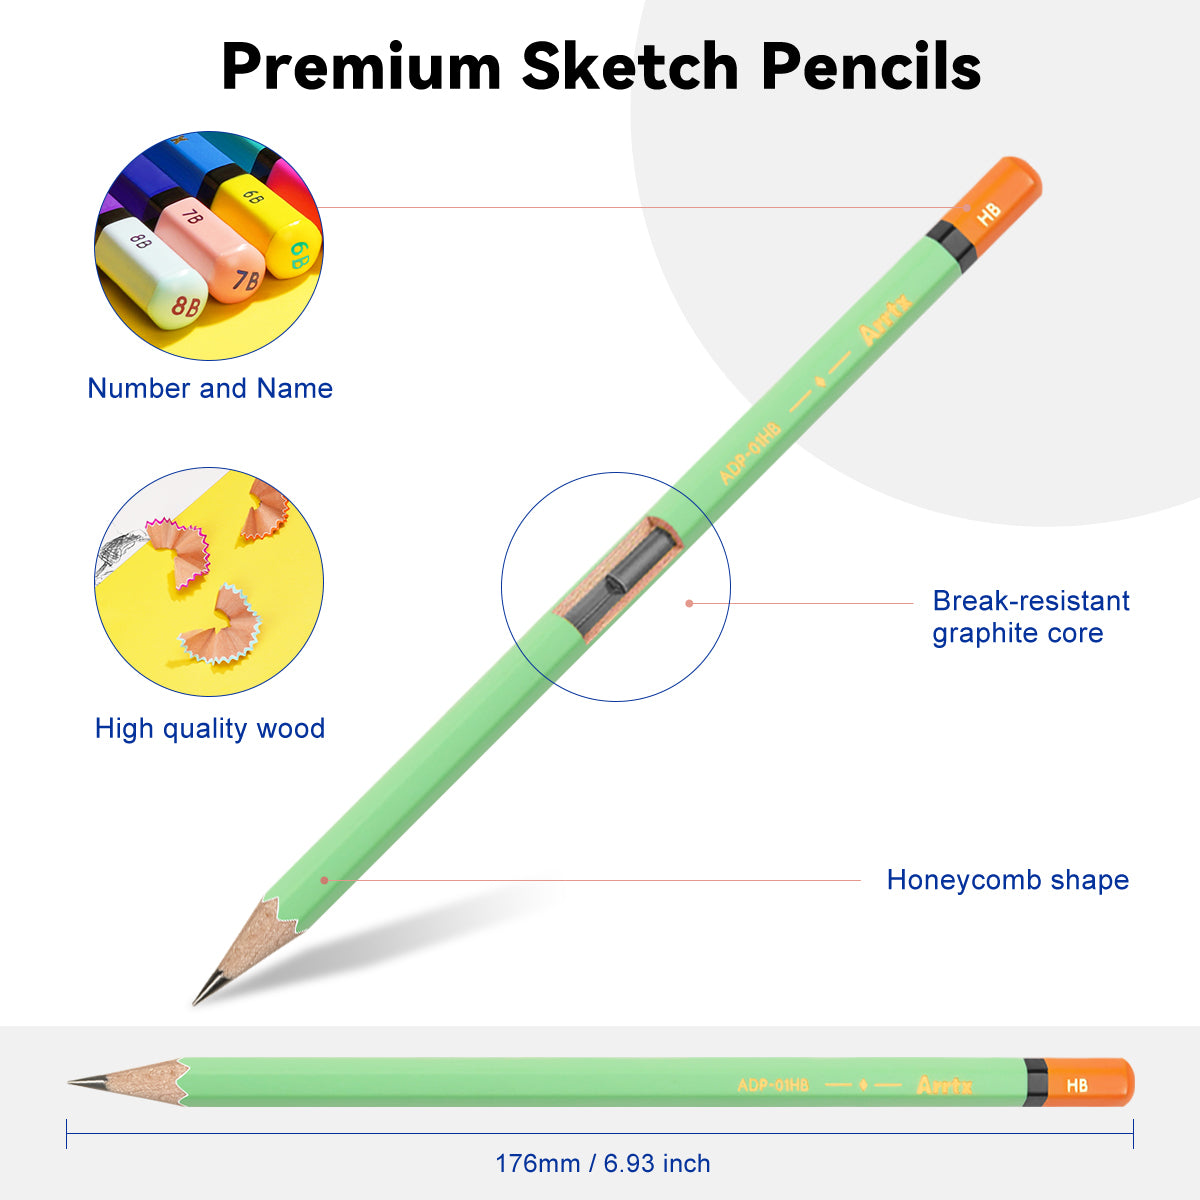 Arrtx Sketch Pencils 14 Pack #2 HB Art Drawing Pencils